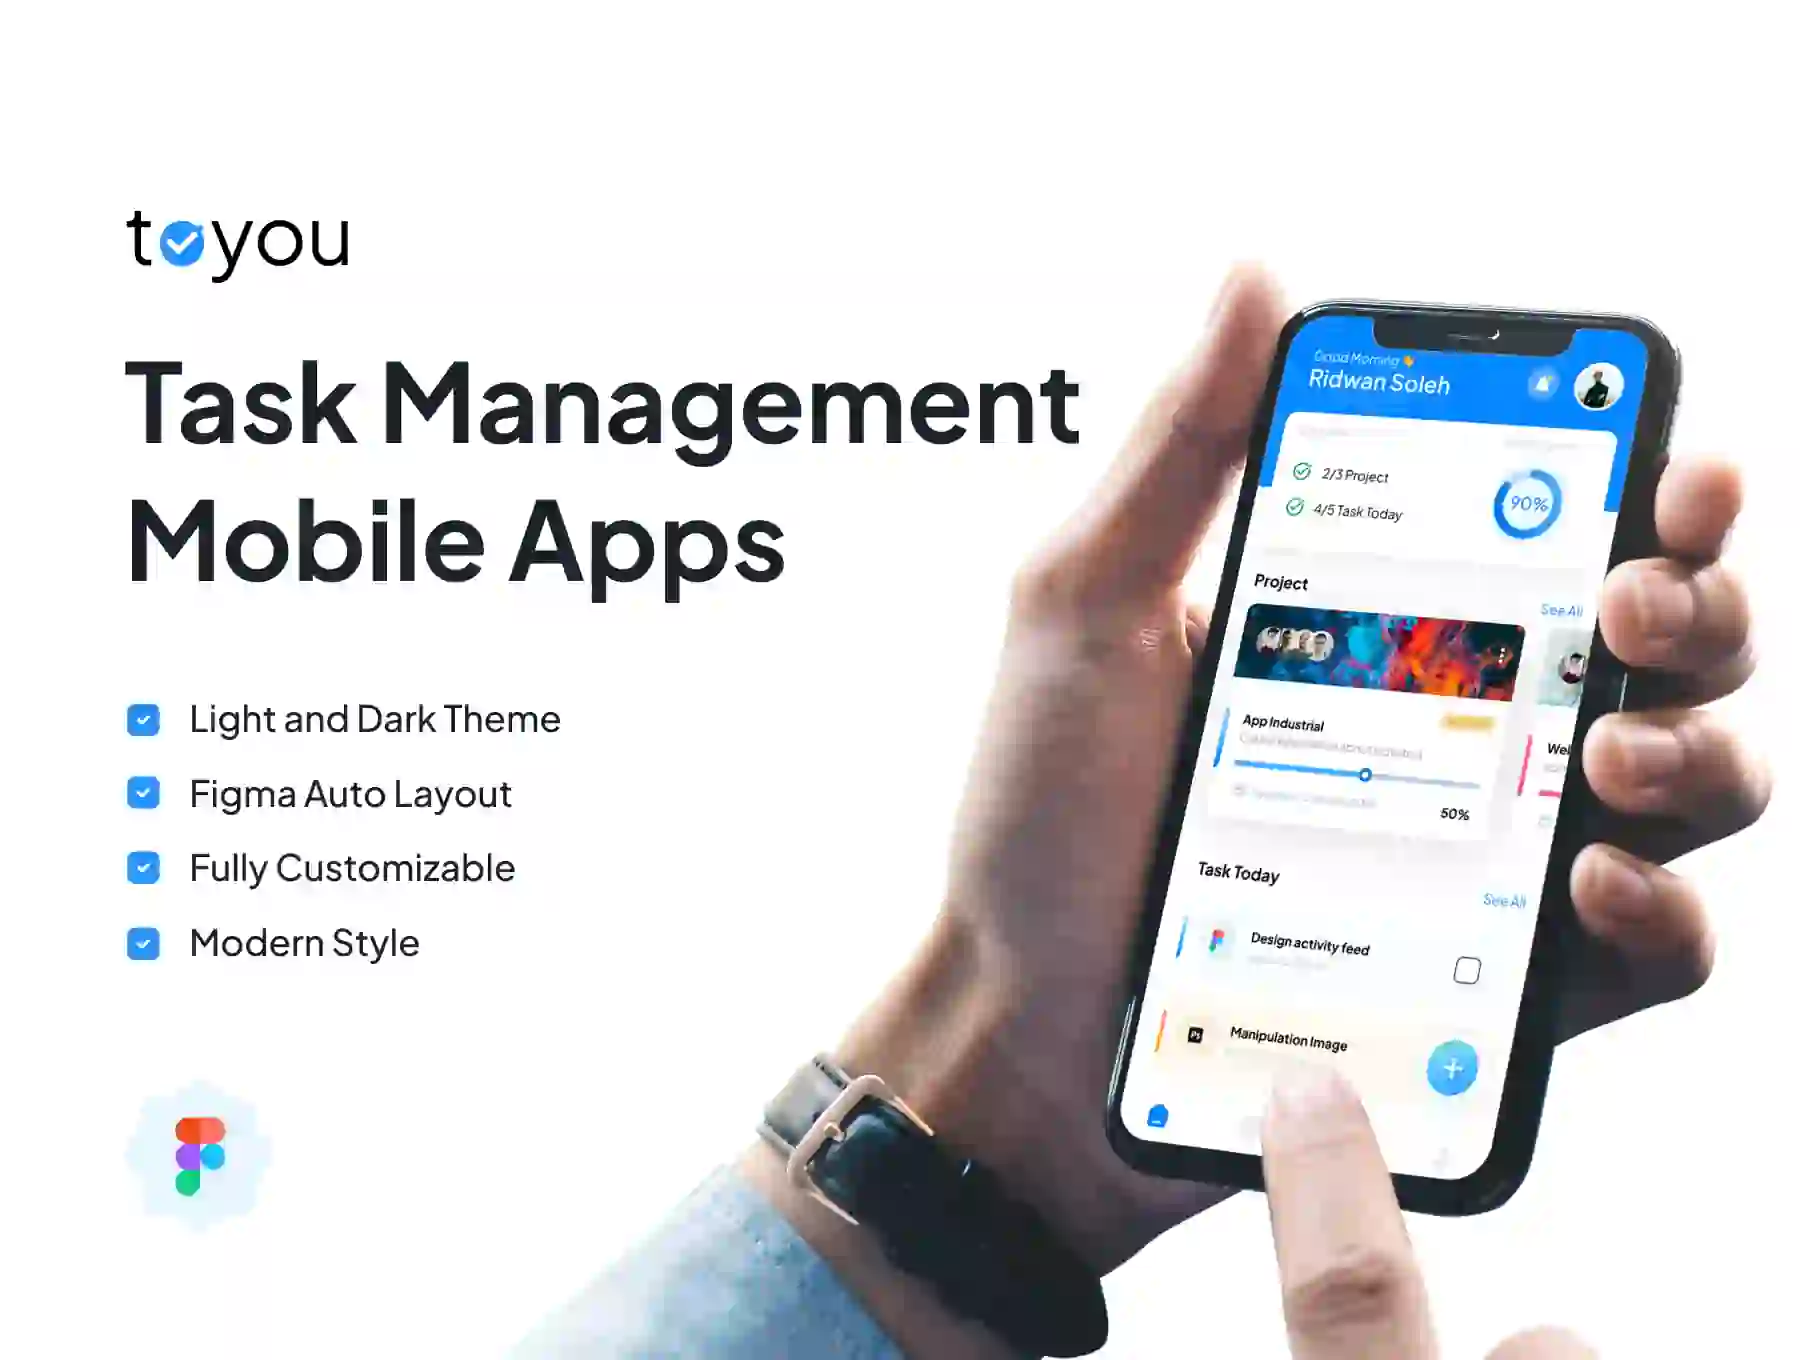 Toyou - Task Management Mobile Apps